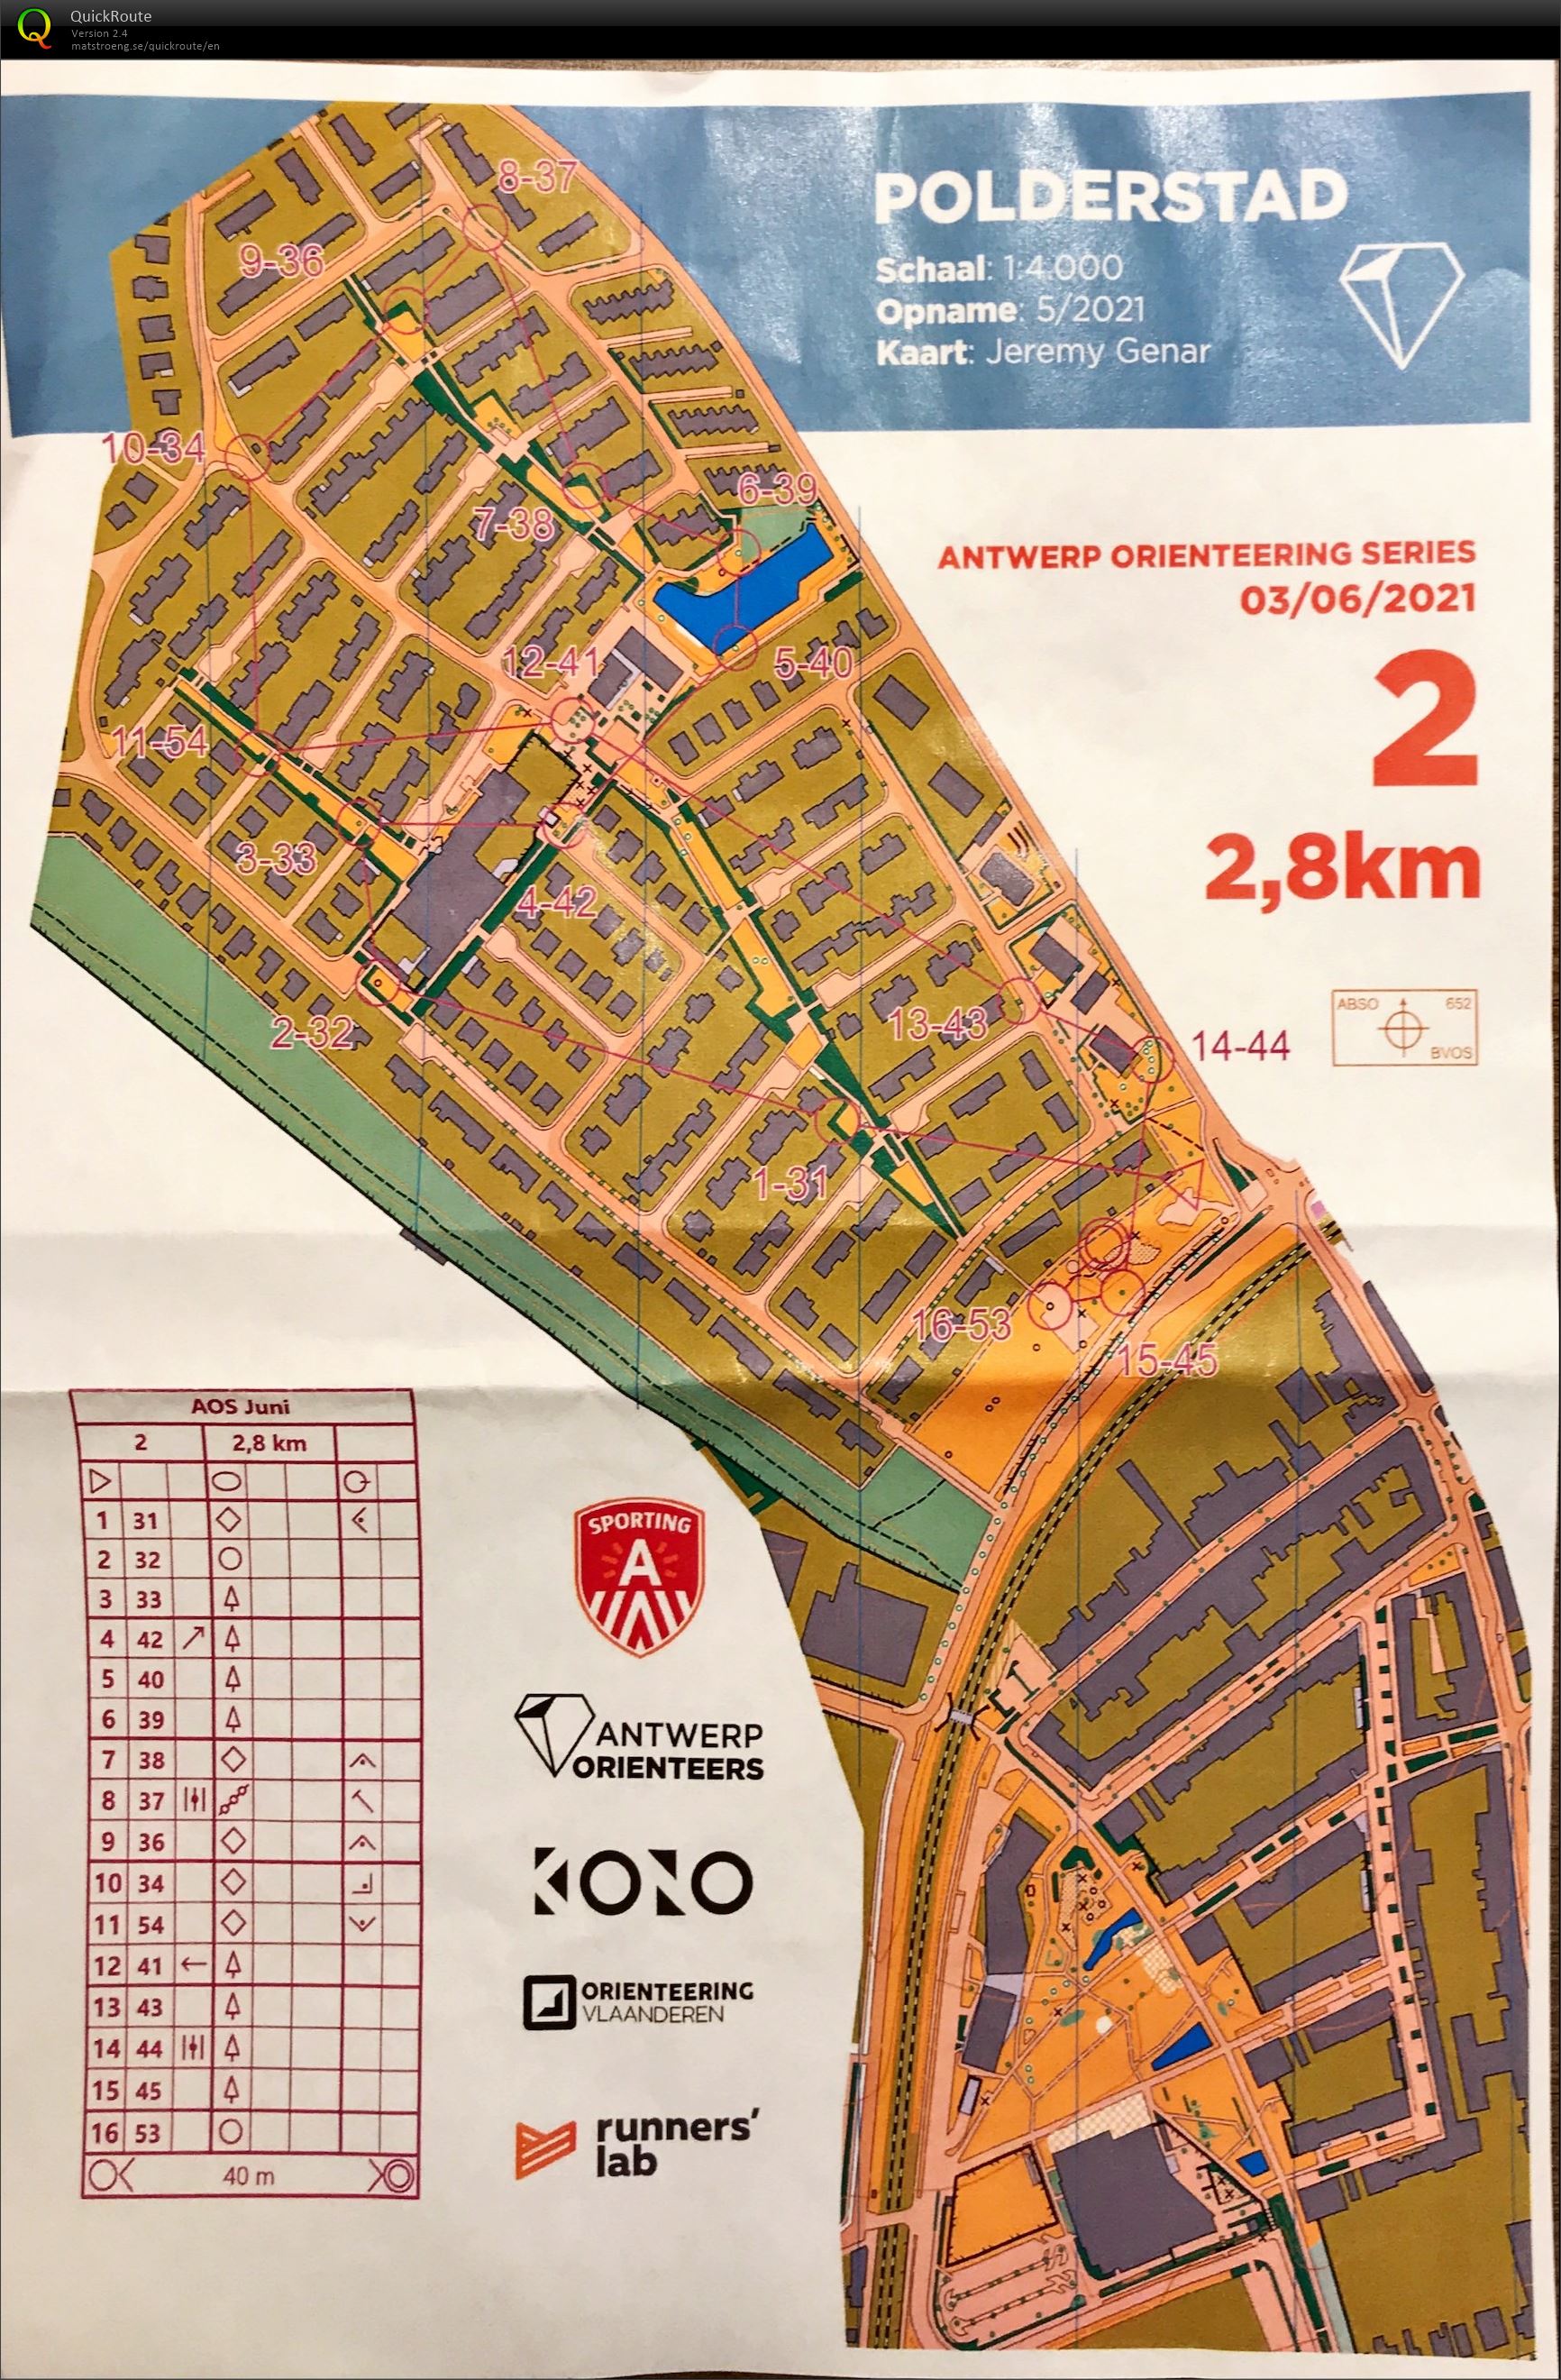 Antwerp Orienteering Series - Polderstad - 2.8K (03/06/2021)